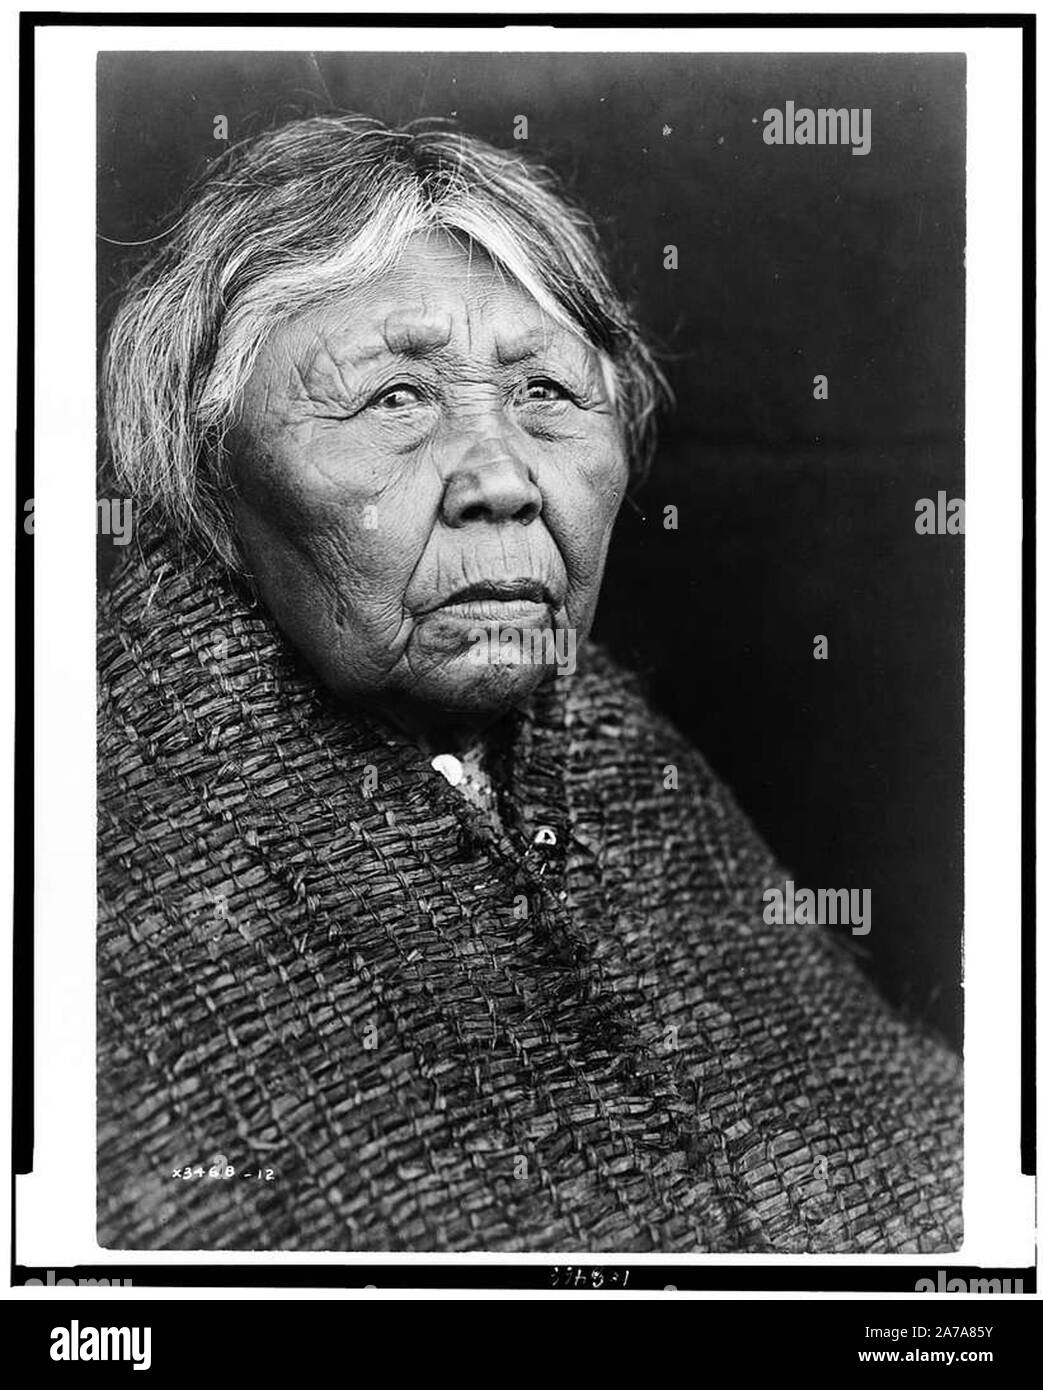 Vintage native american indian portrait photograph Stock Photo